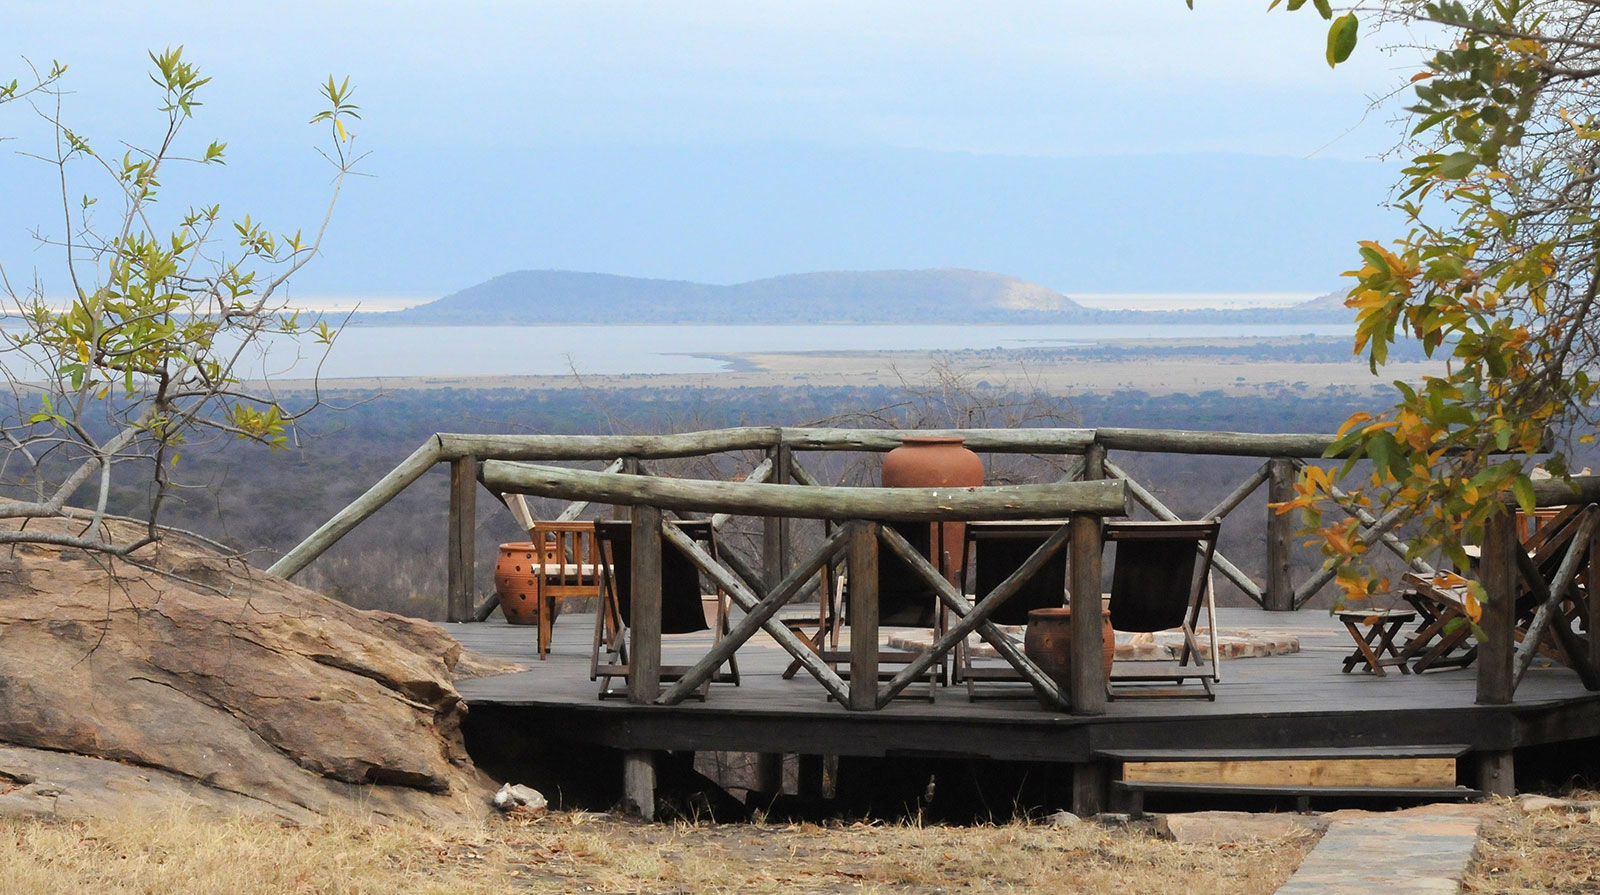 Maweninga Camp - A peaceful place to be
